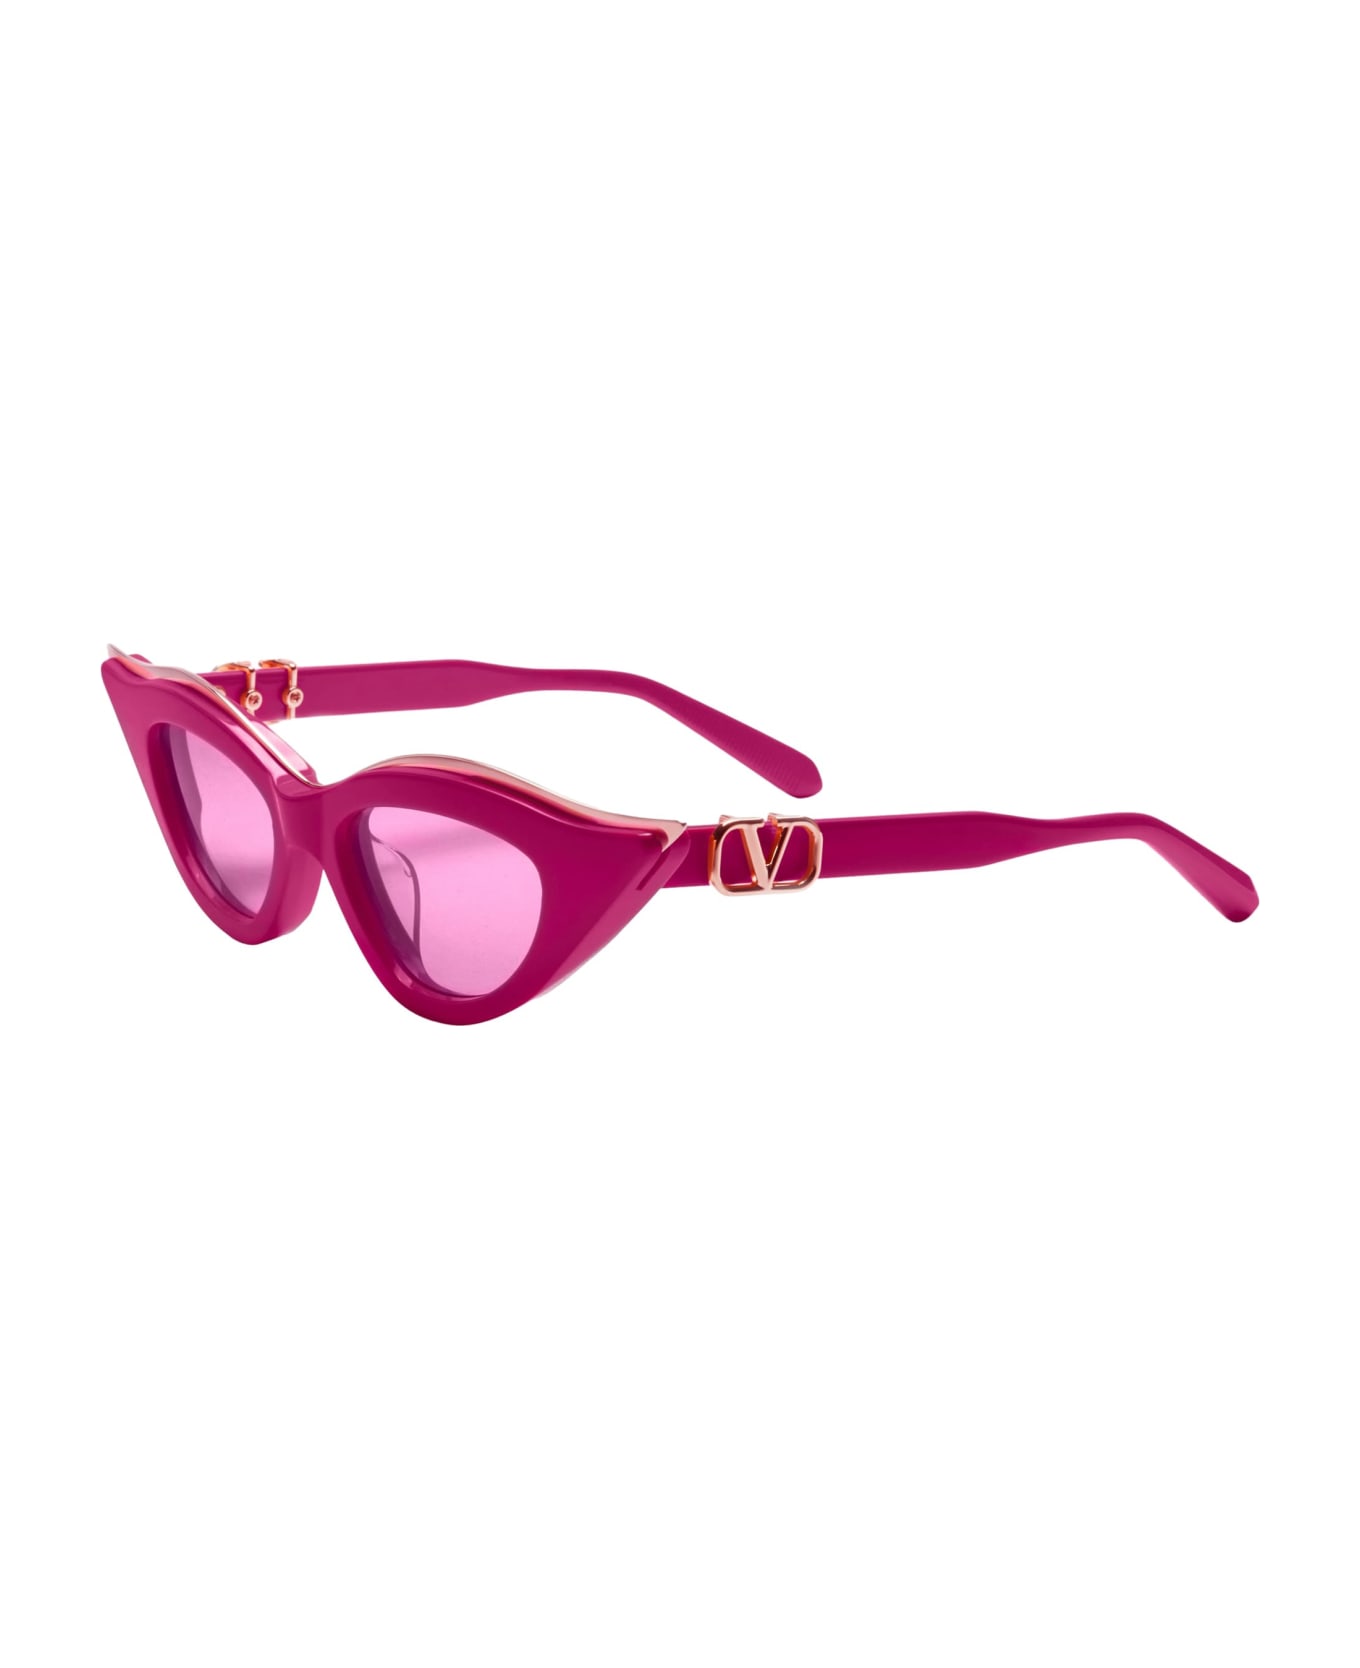 Valentino Eyewear V-goldcut Ii - Pink / White Gold Sunglasses - pink/gold